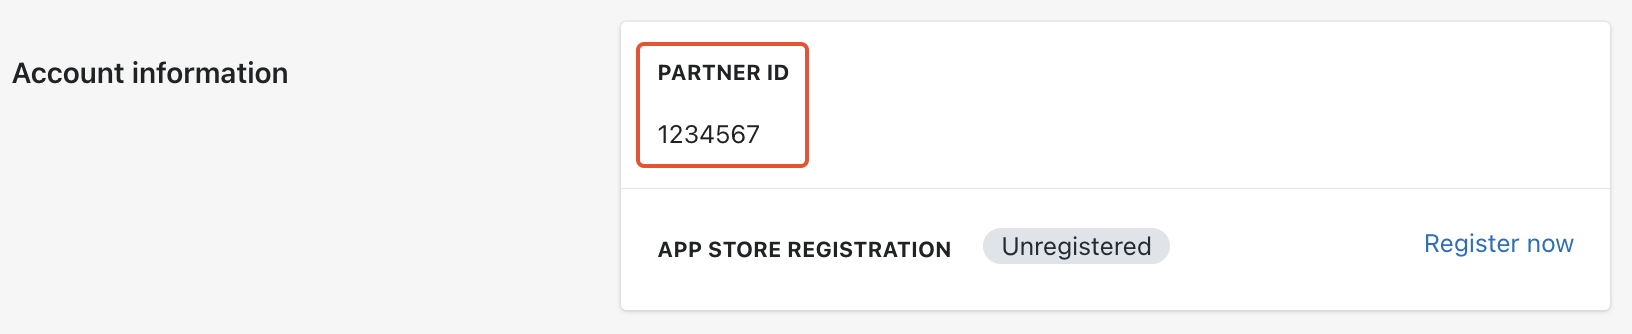 partner id screenshot